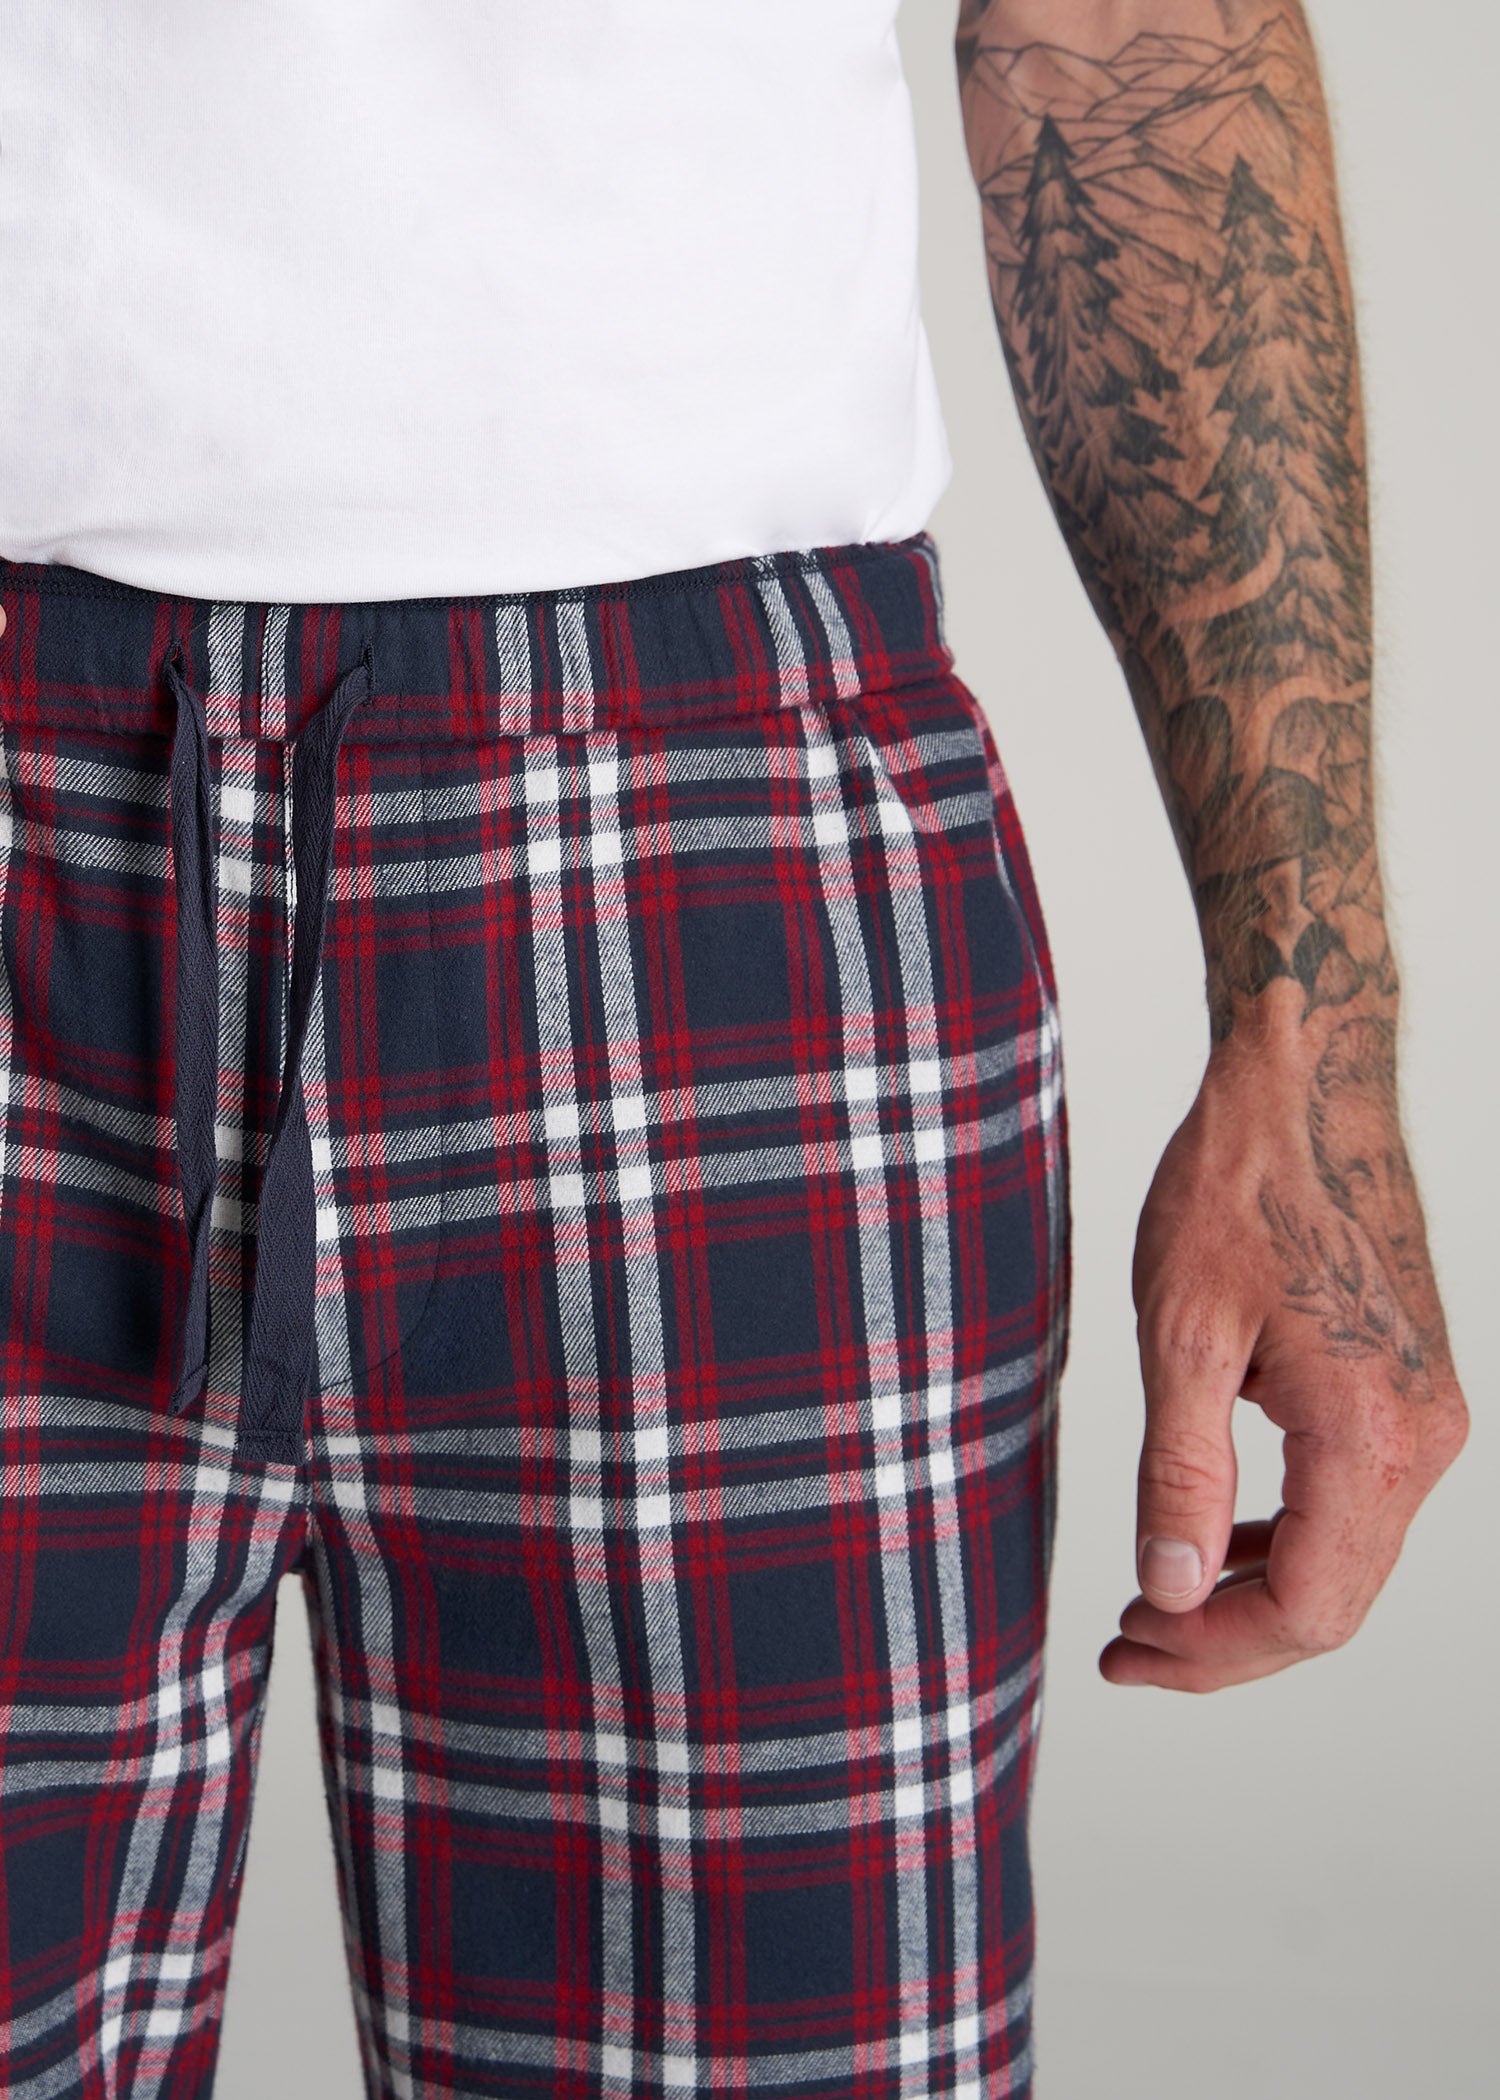 Plaid Pajama Pants for Tall Men in Navy & Red Tartan